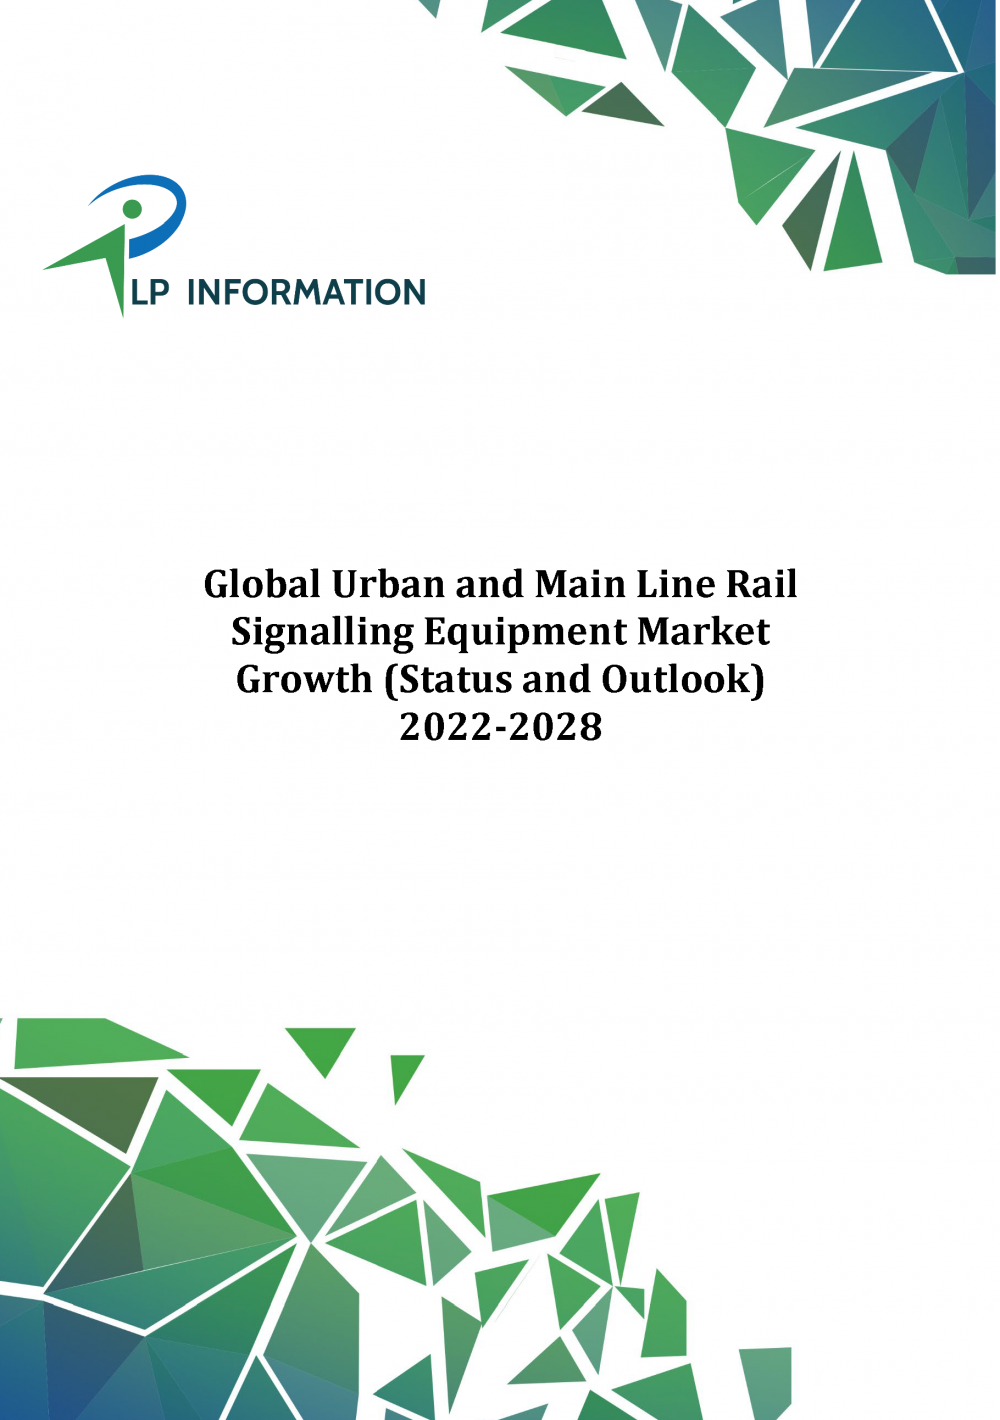 Global Urban and Main Line Rail Signalling Equipment Market Growth 2022-2028